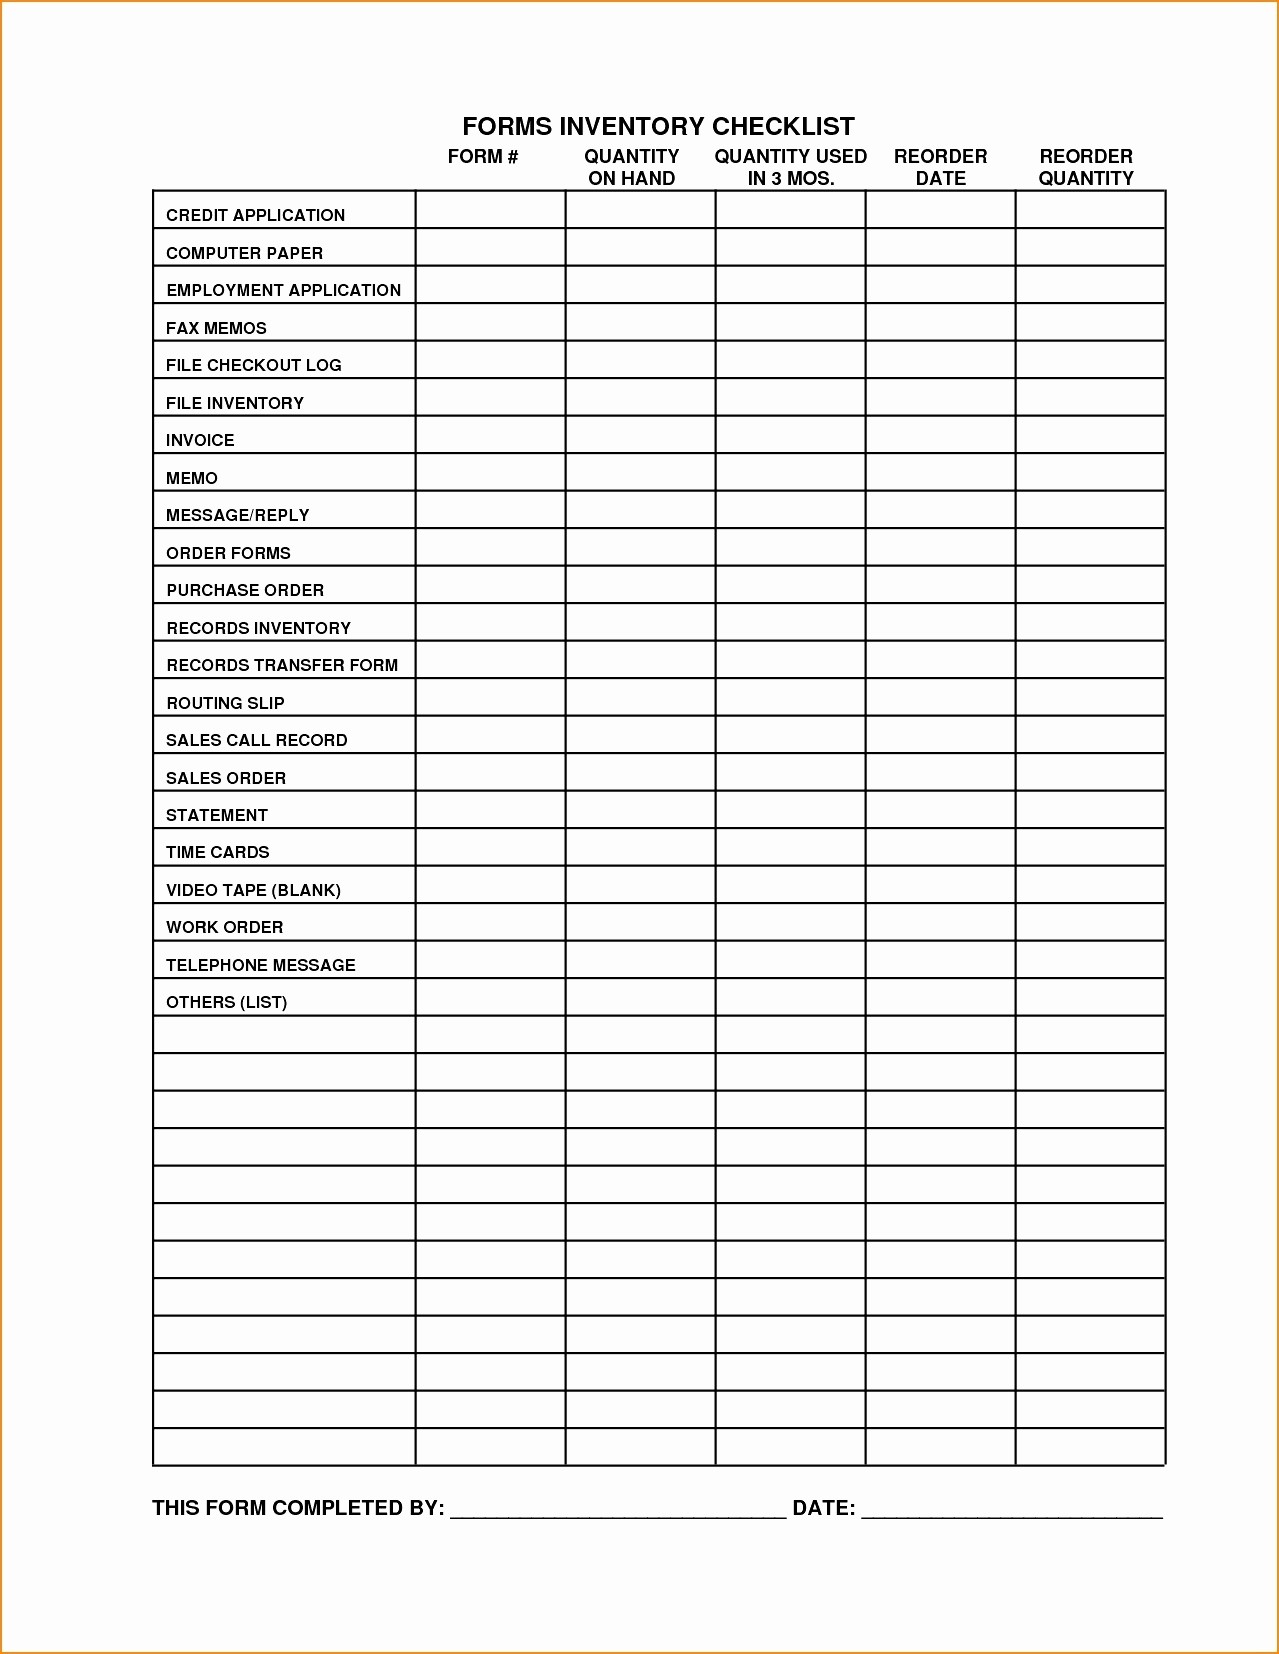 50 Unique Lularoe Spreadsheet DOCUMENTS IDEAS Document Free